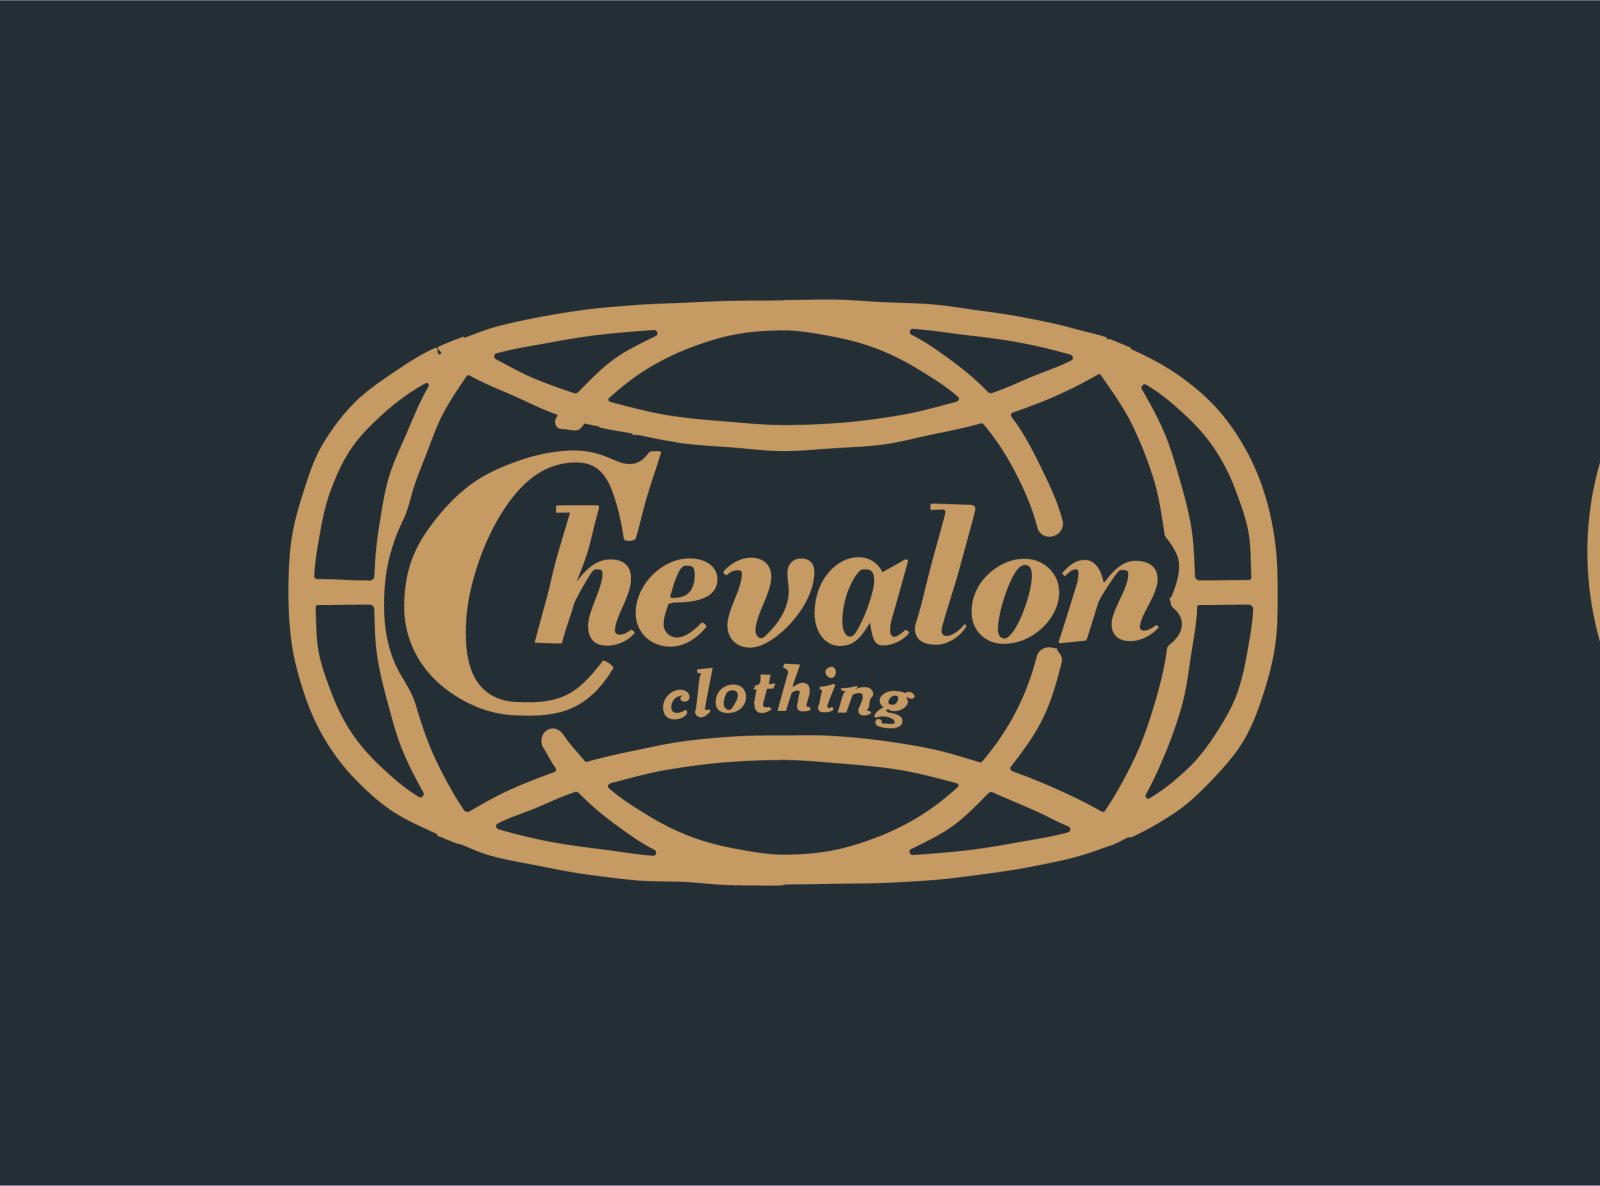 Chevalon World Logo by JT Burg on Dribbble